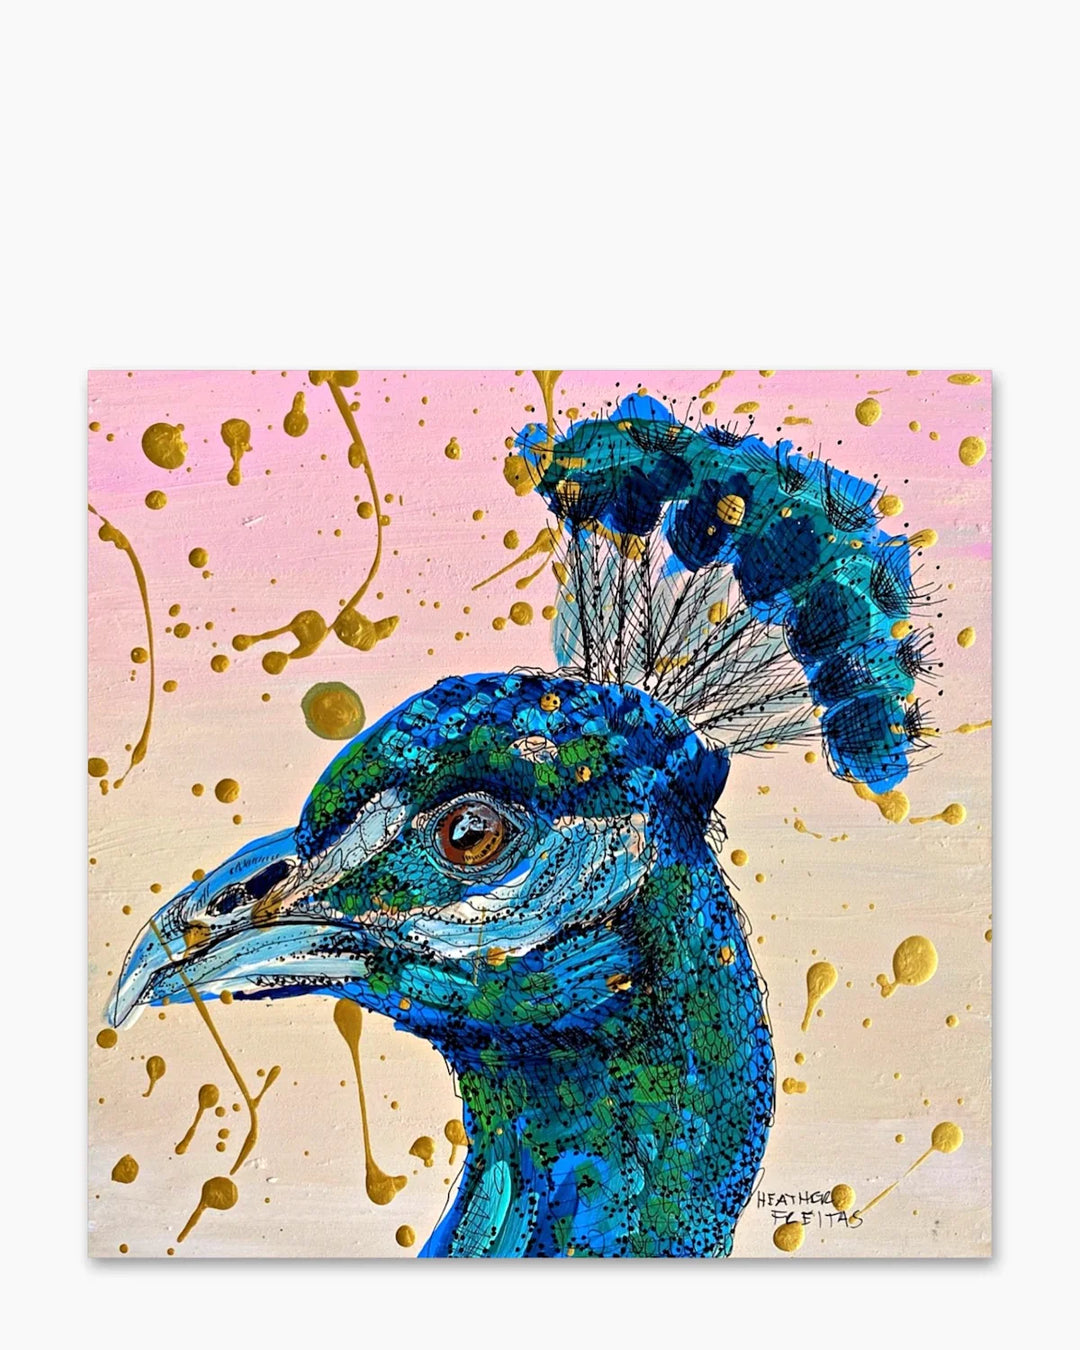 Emerald Peacock - Heather Freitas 